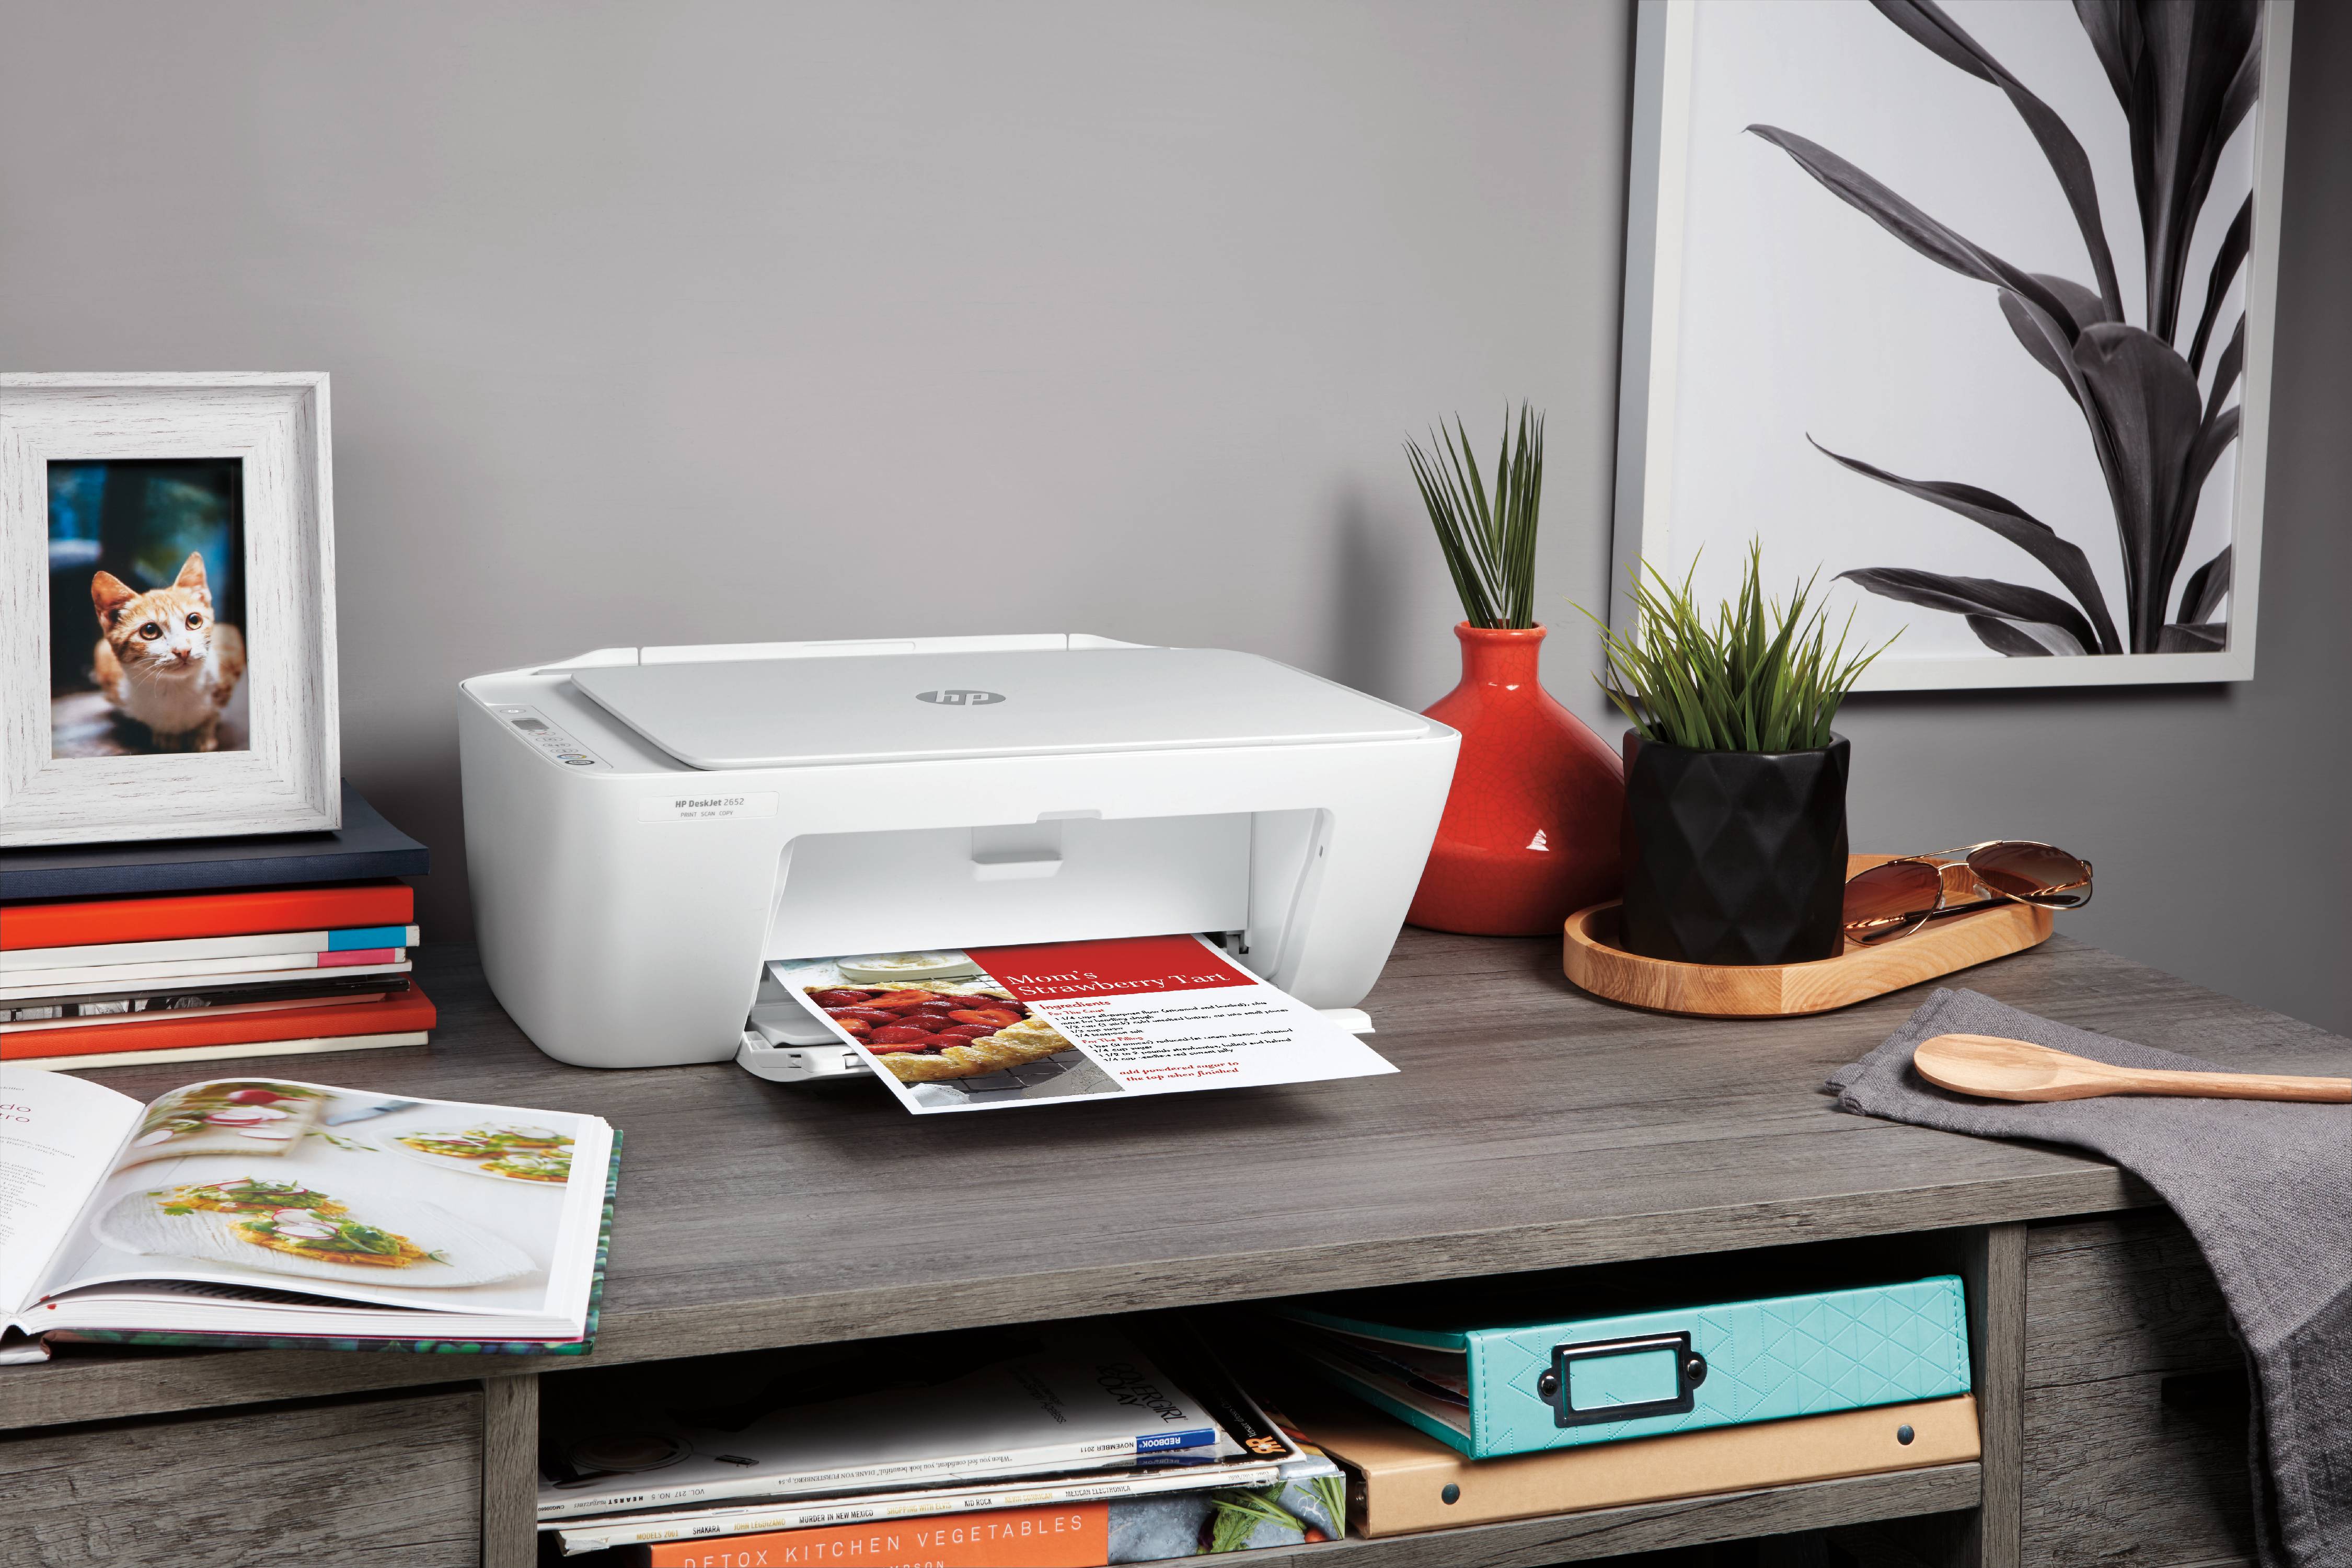 HP DeskJet 2652 All-in-One Wireless Color Inkjet Printer - Instant Ink Ready, White - image 4 of 20